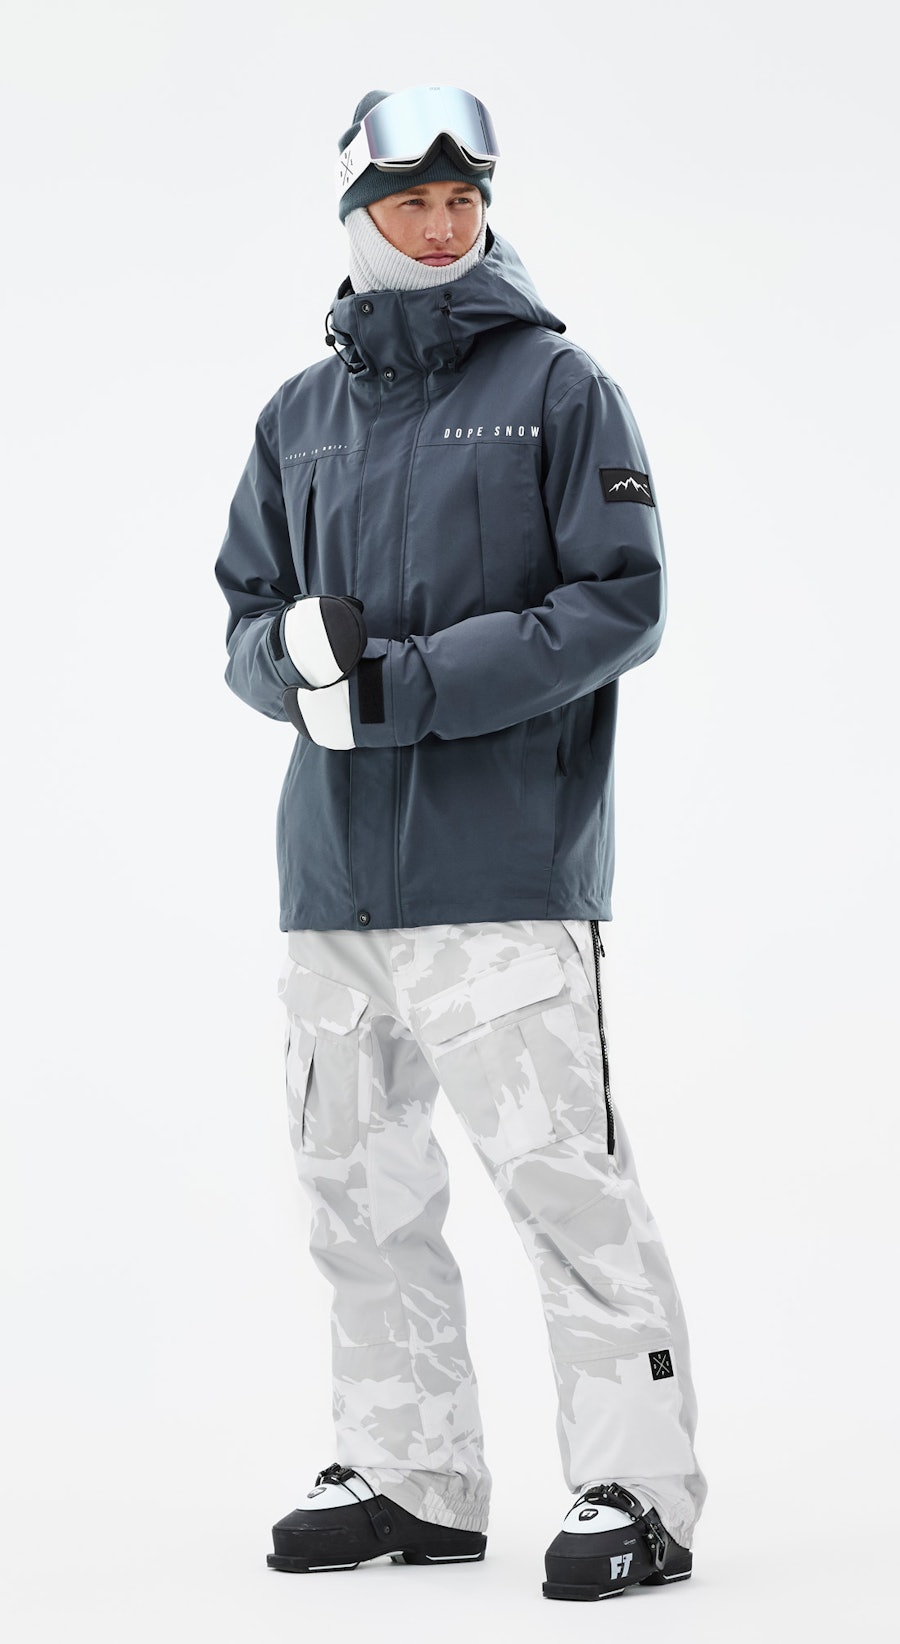 Ranger Ski Outfit Men Metal Blue/Grey Camo